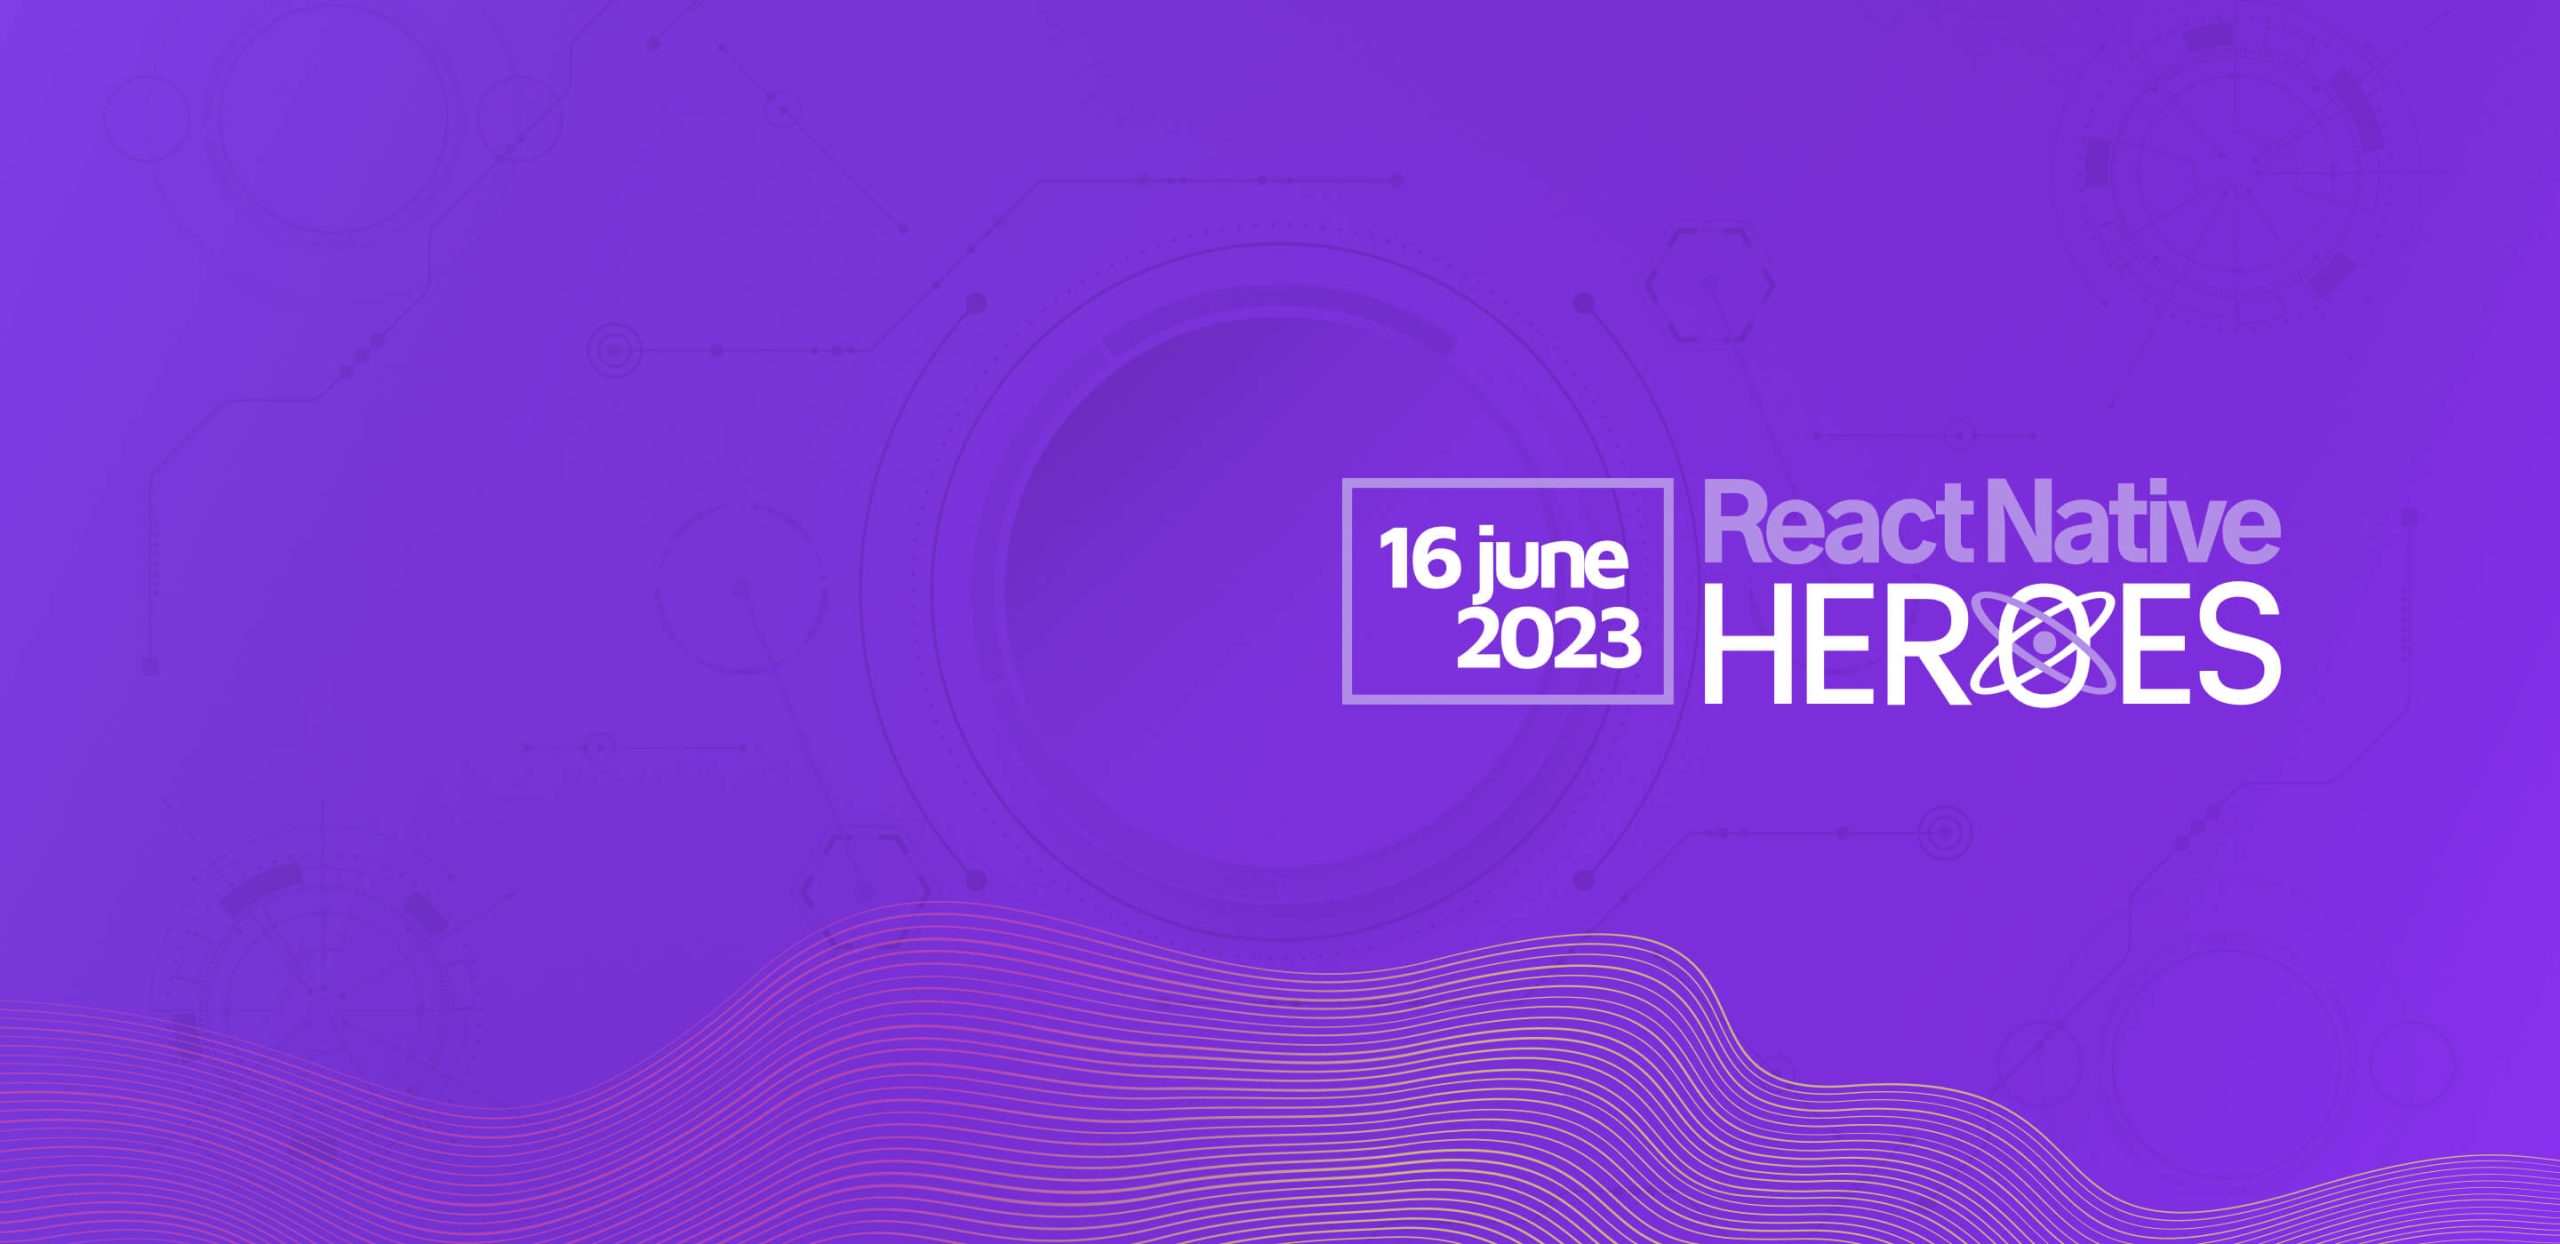 Hero-reactnative-desktop02